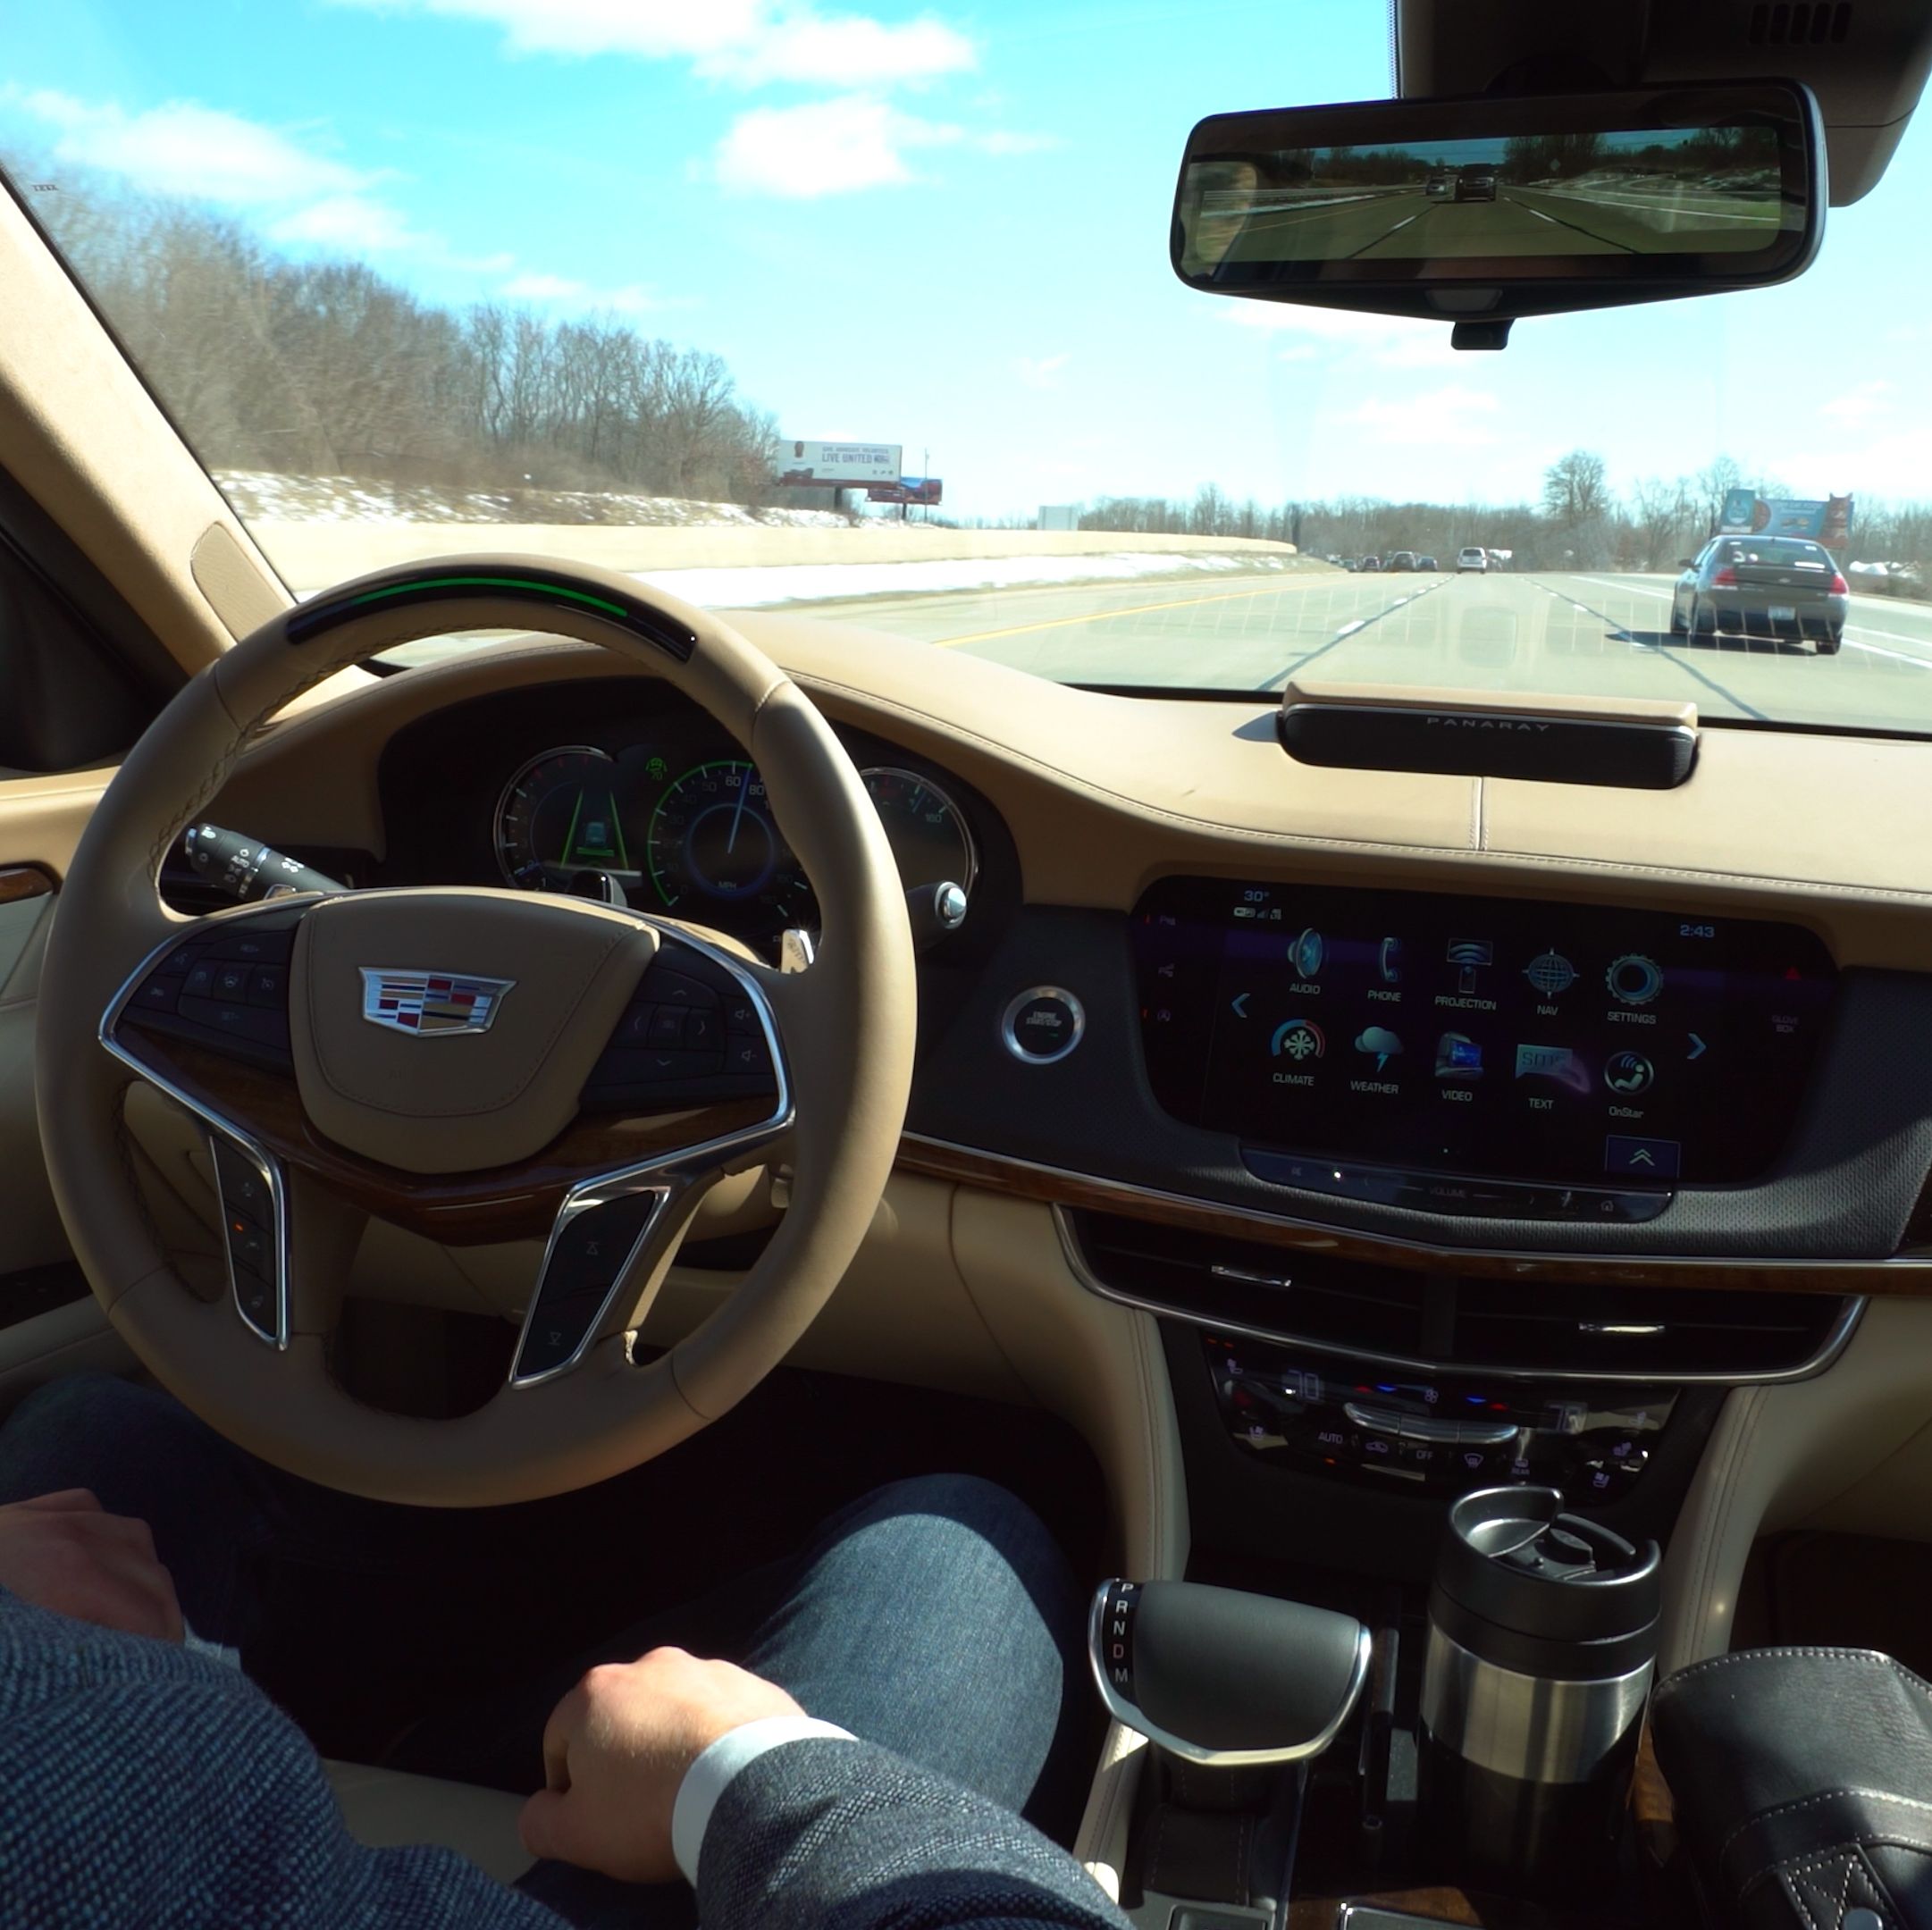 Drivers Too Trusting of Semi-Autonomous Technology, IIHS Says